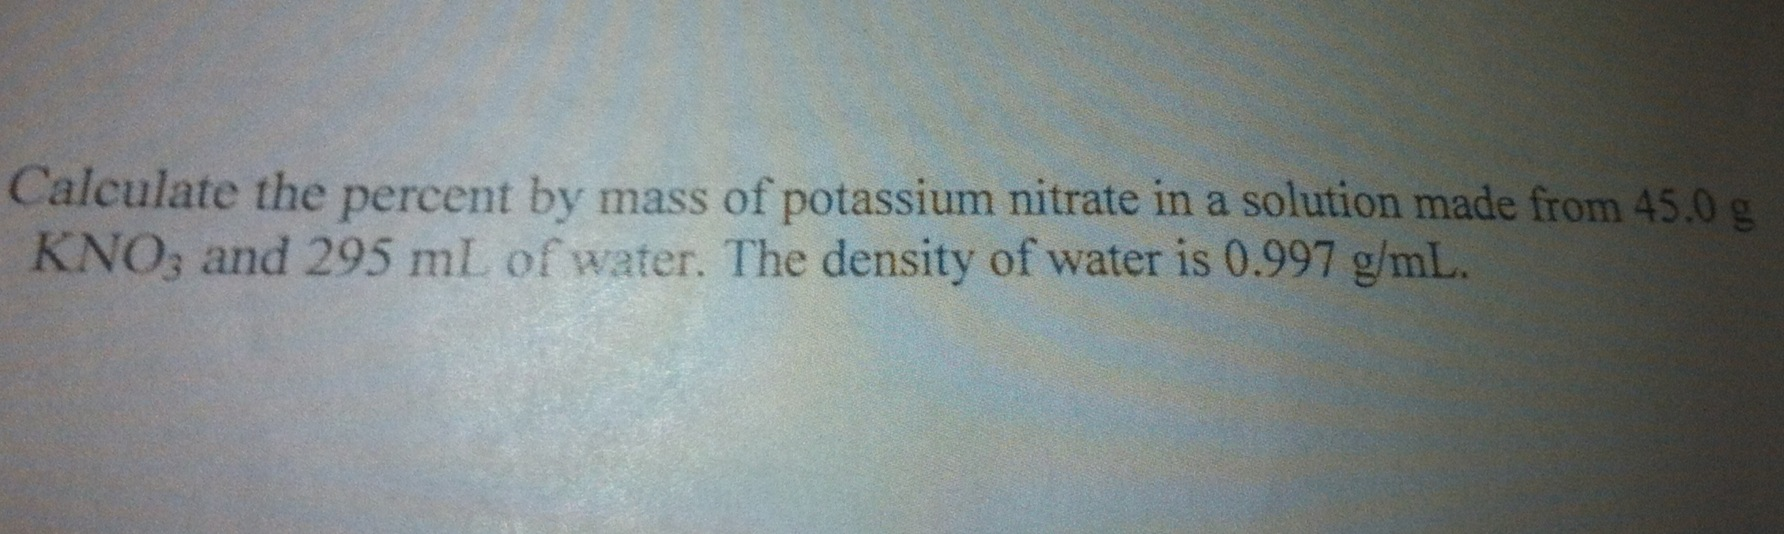 potassium density